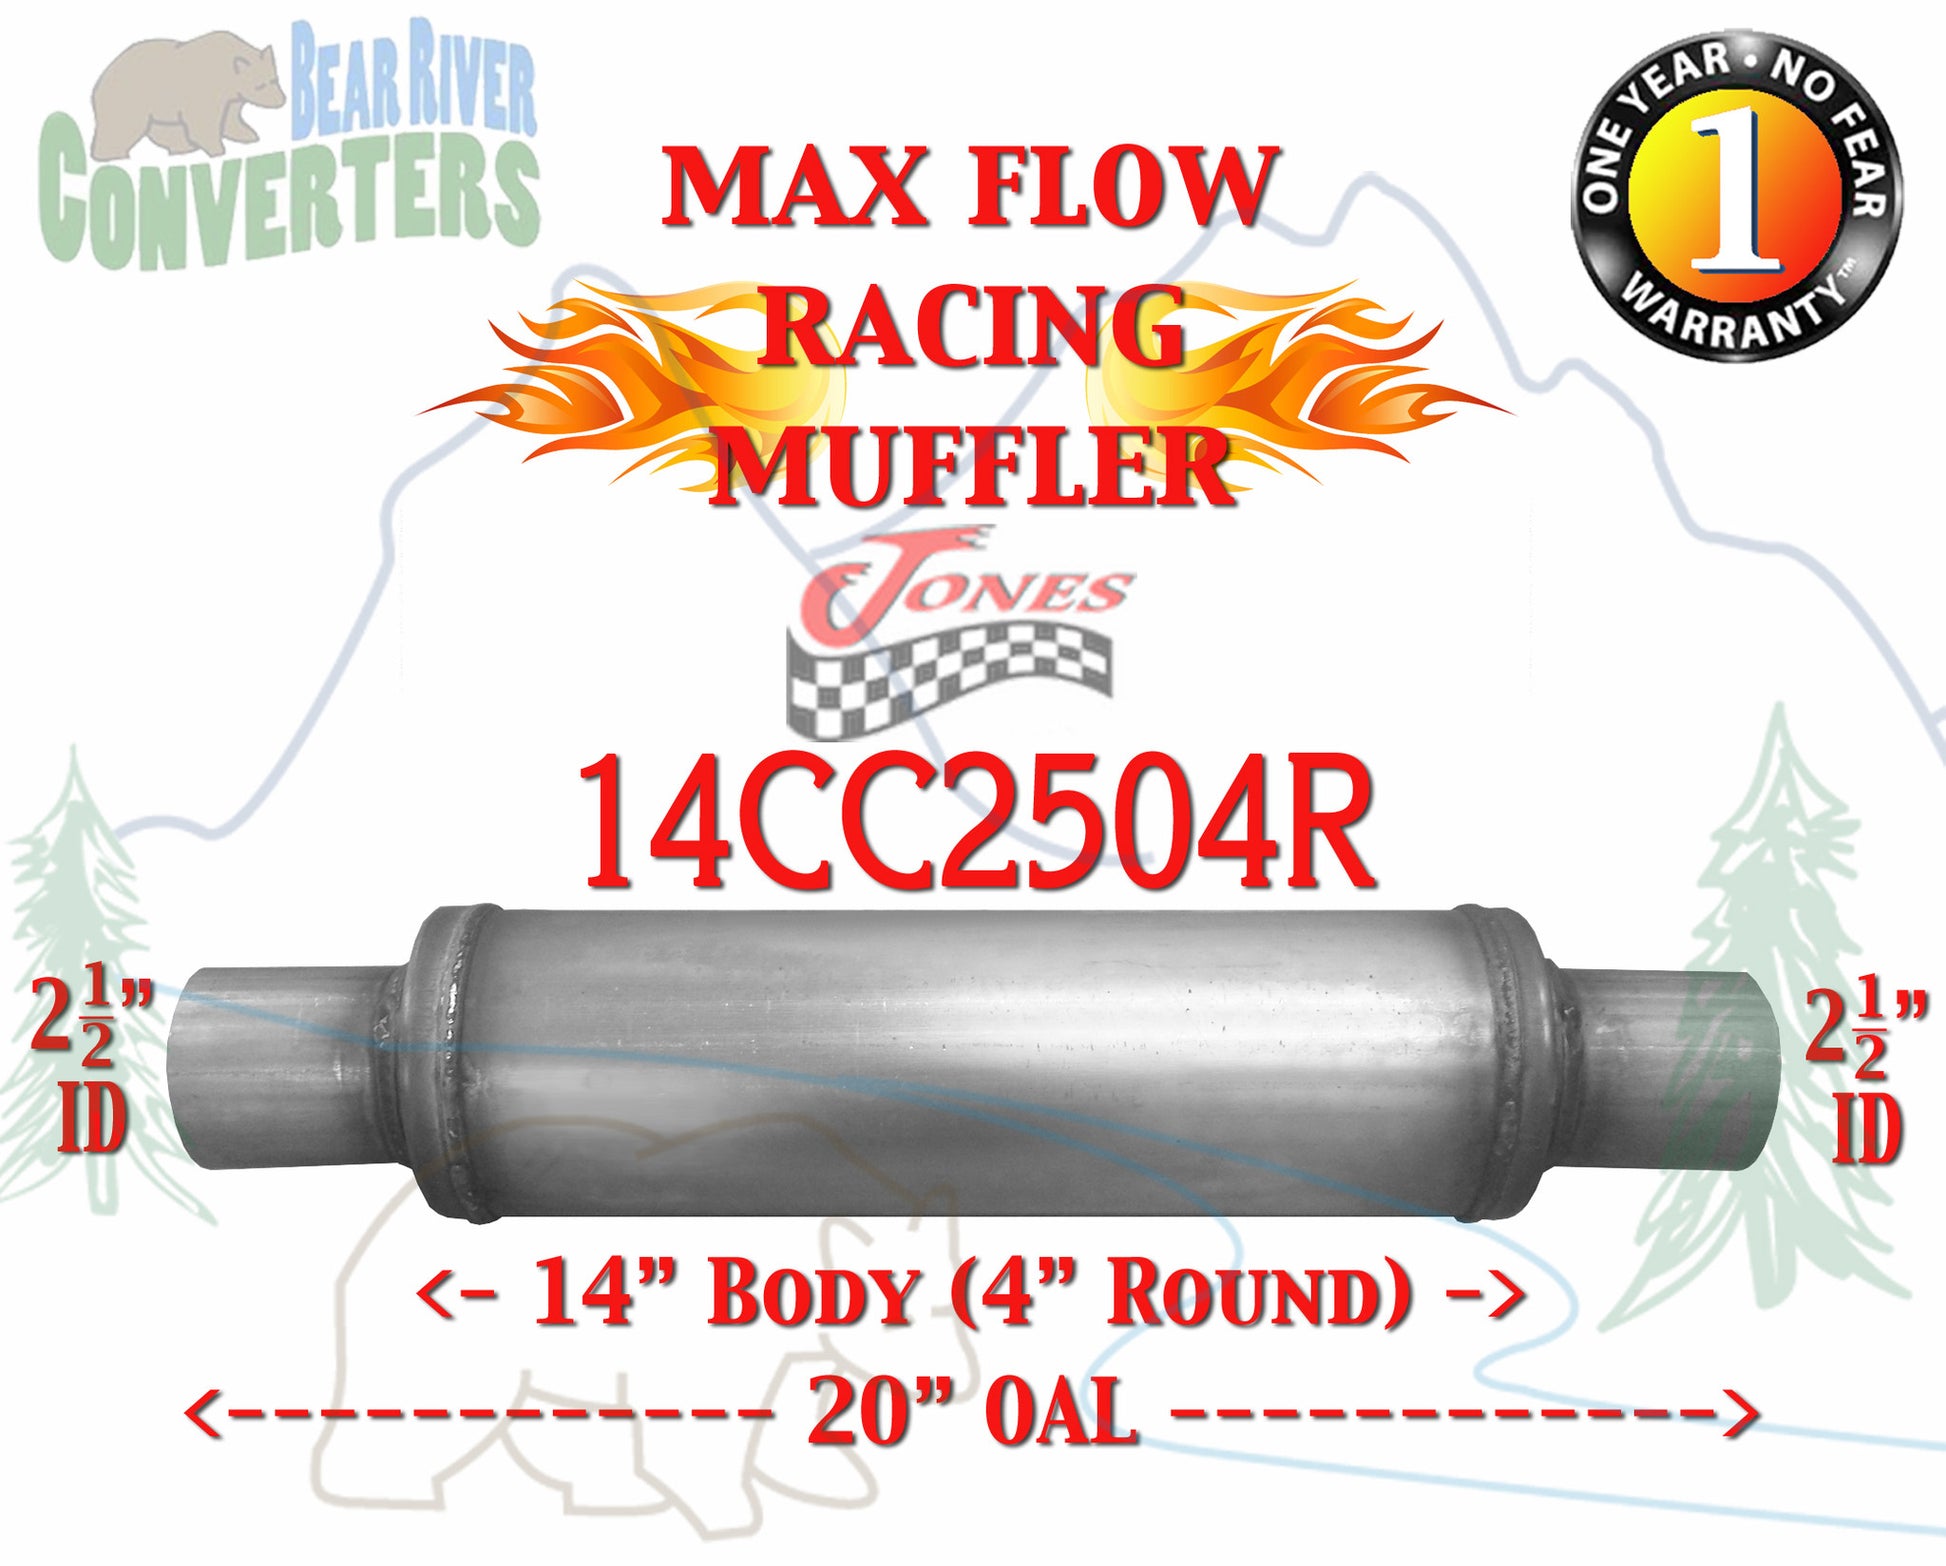 14CC2504R Jones JXS0416 Max Flow Racing Muffler 14” Round Body 2 1/2” 2.5” Pipe Center/Center 20” OAL - Bear River Converters